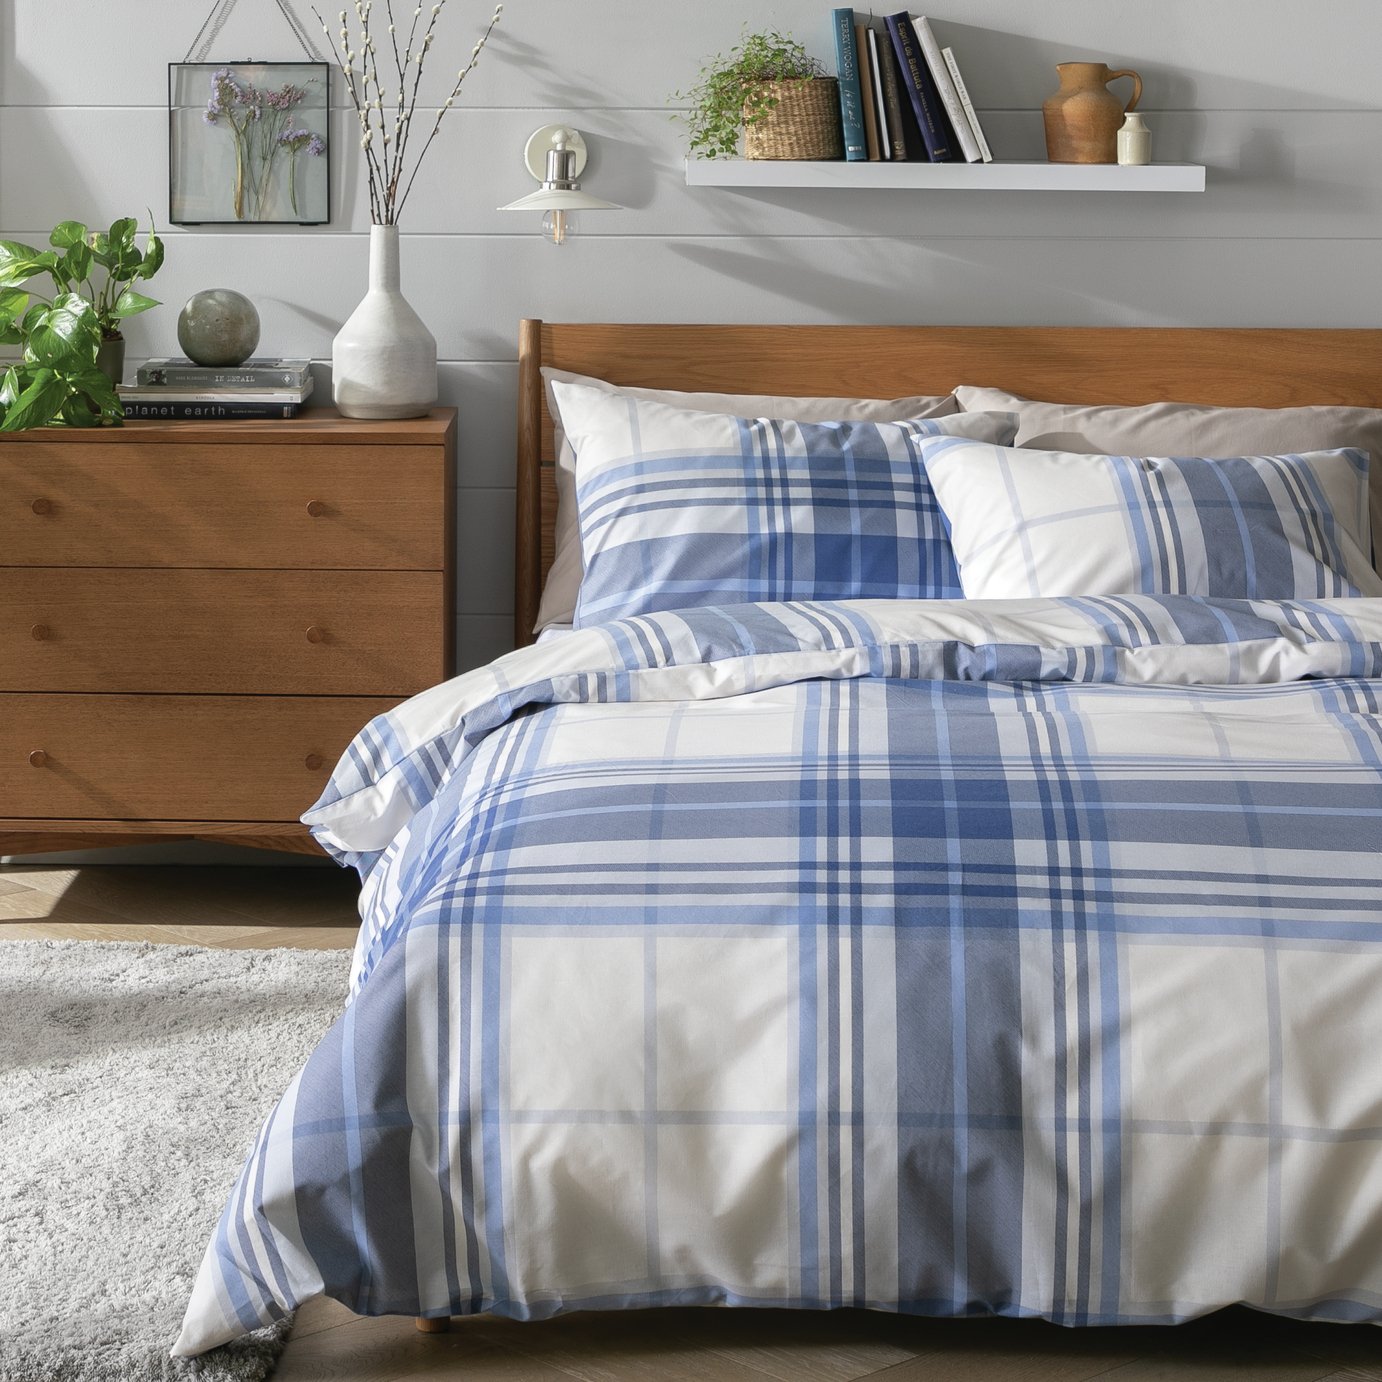 Argos Home Printed Check Blue & White Bedding Set - Double